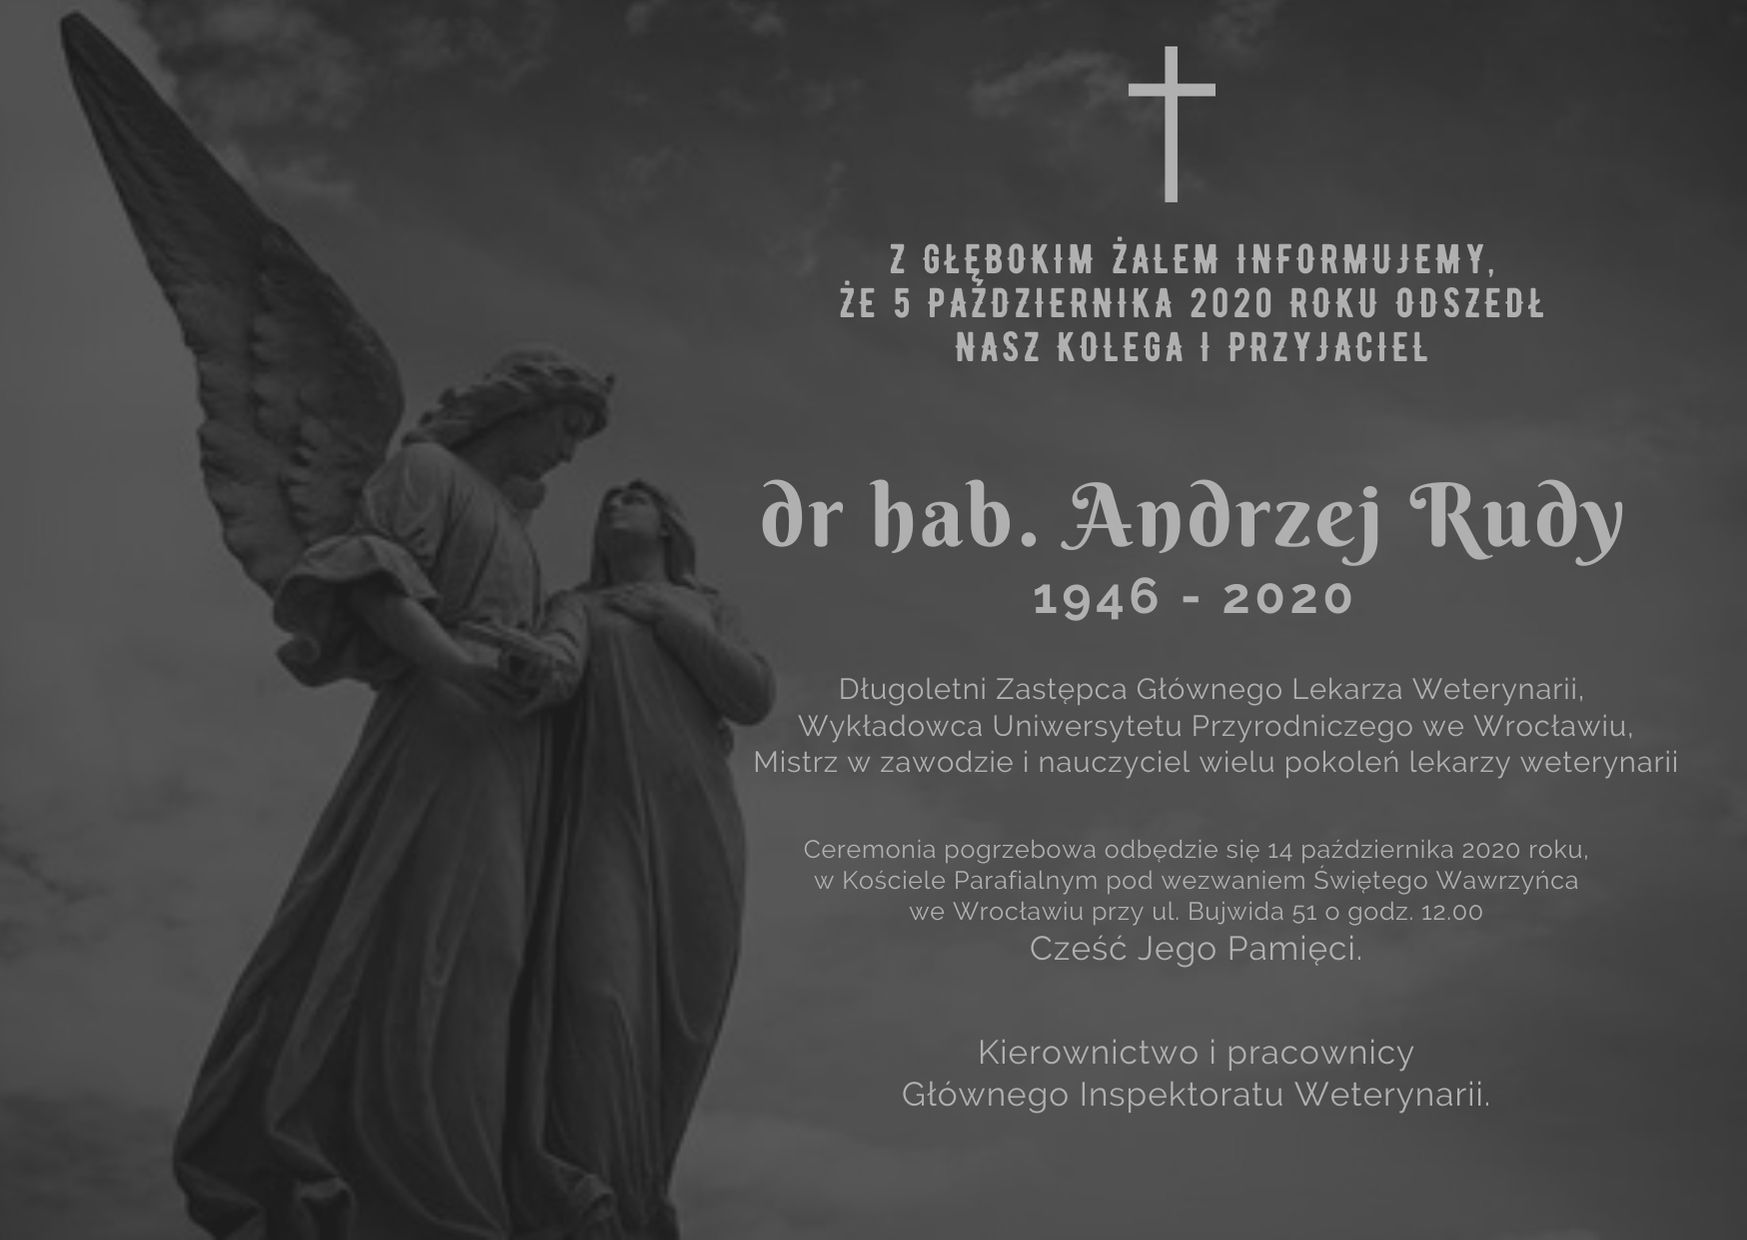 Pożegnanie dr. hab. Andrzeja Rudego